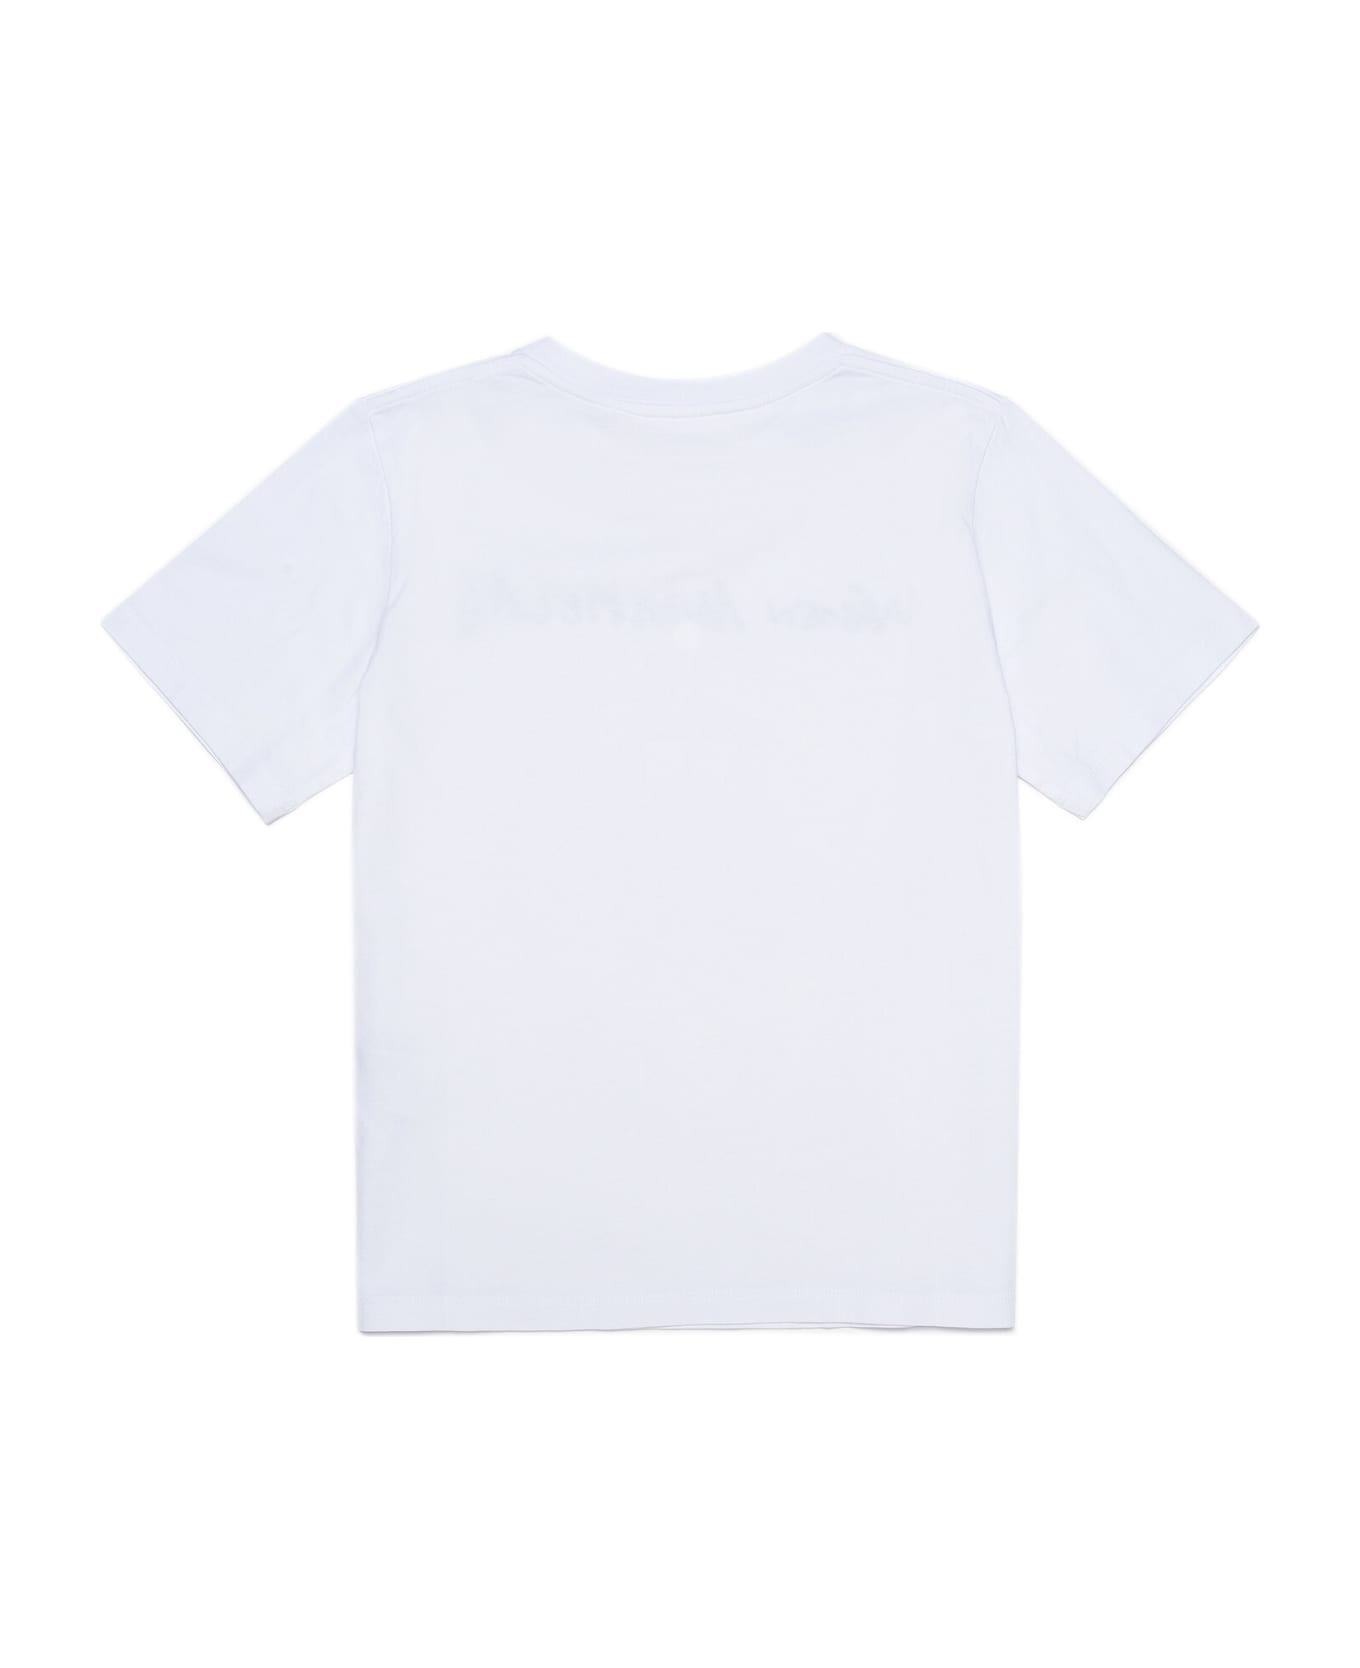 MM6 Maison Margiela Mm6t10u T-shirt Maison Margiela - White